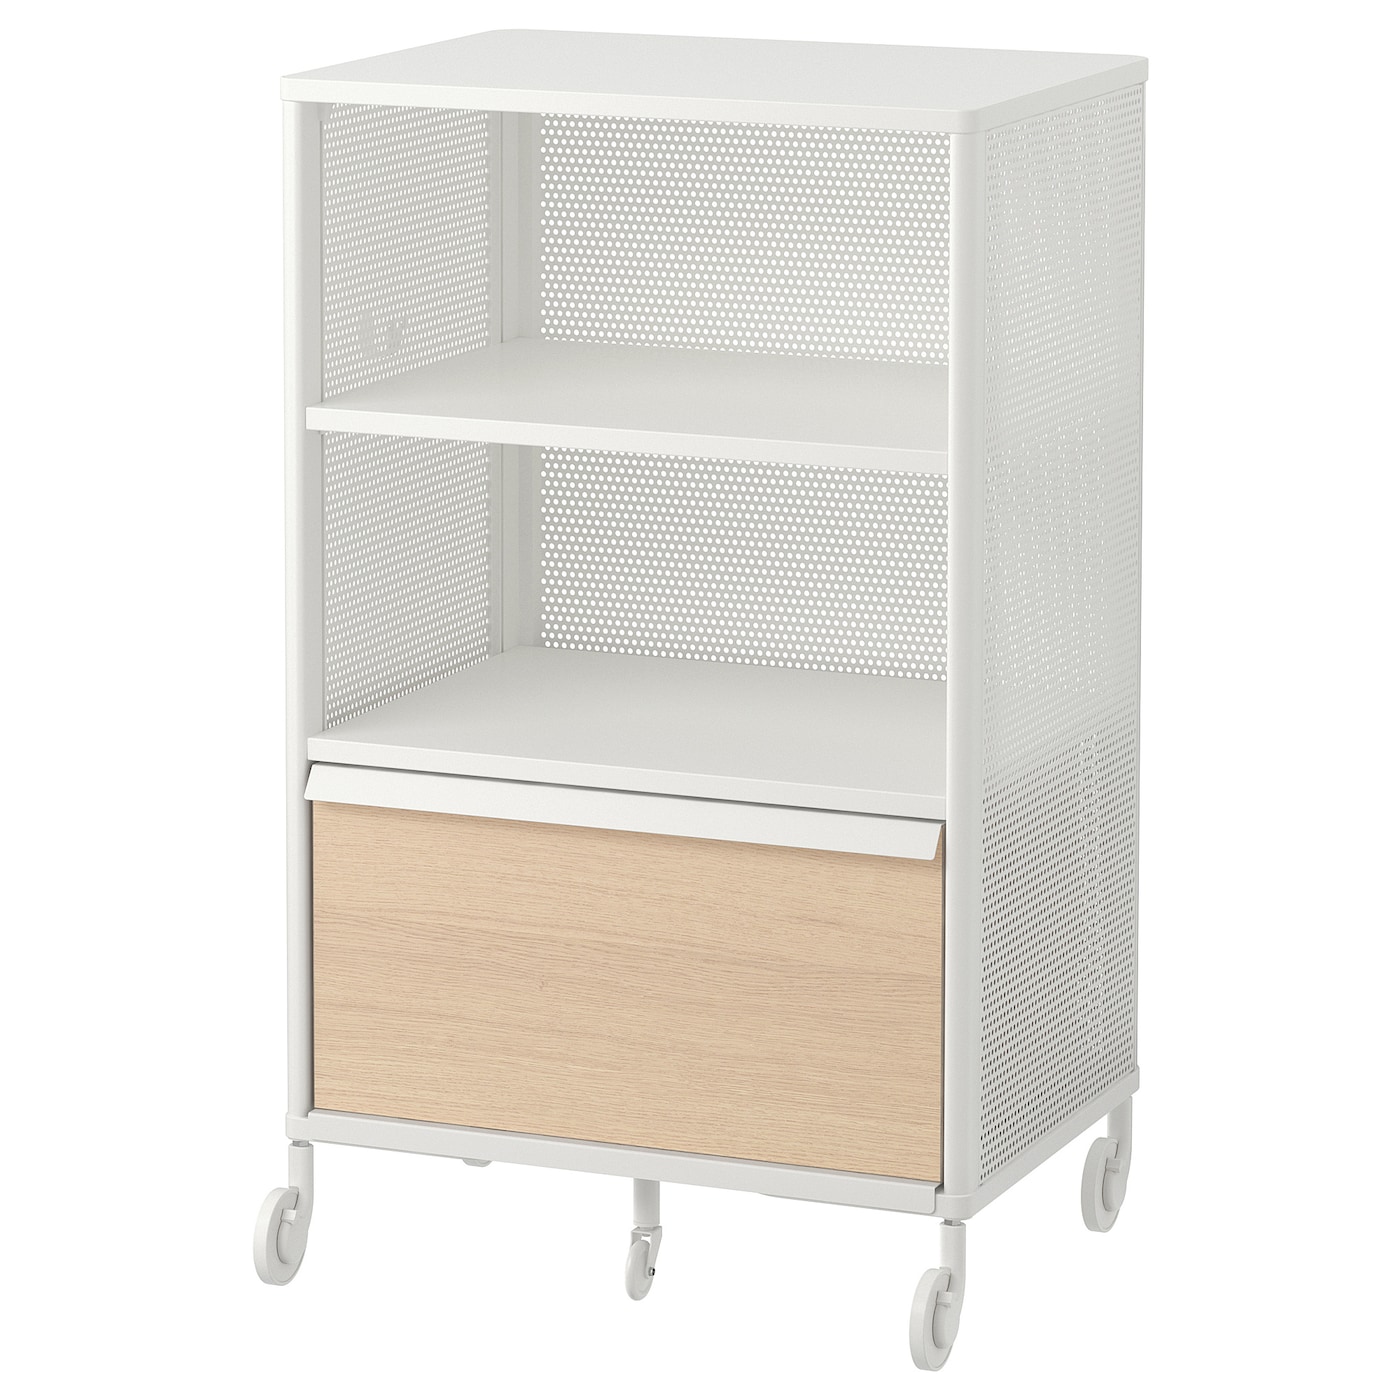 Офисный шкаф - IKEA BEKANT, белый, 61х45х101 см, БЕКАНТ ИКЕА